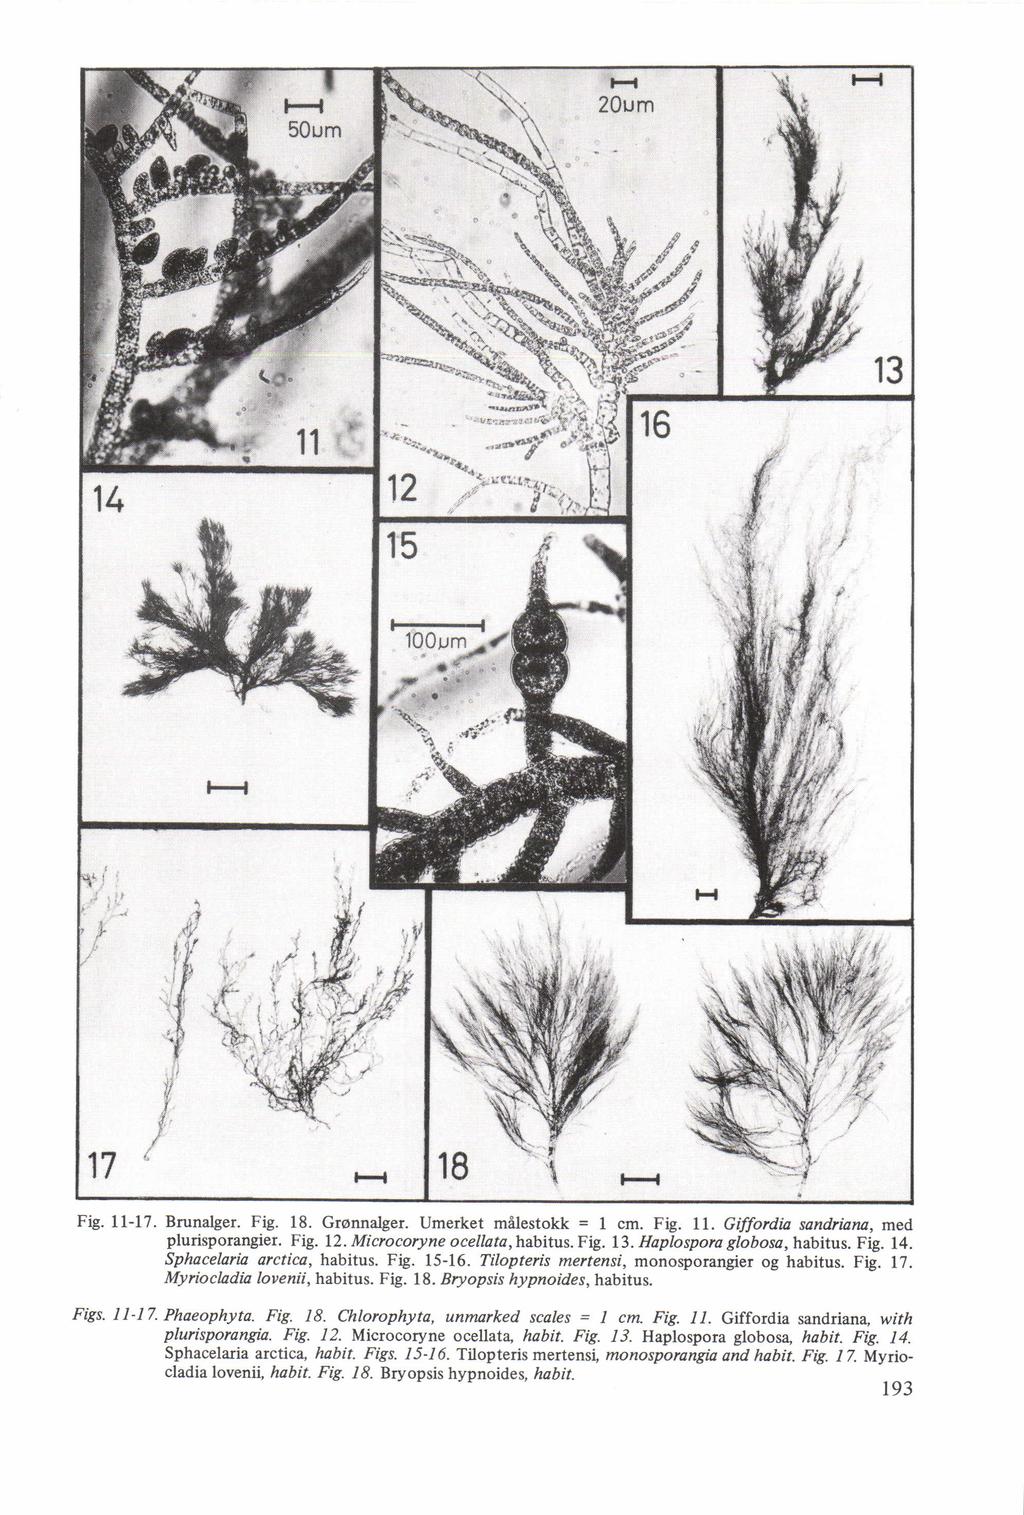 Fig. 11-17. 3111alger. Fig. 18. Gronnalger. Umerket milestokk = I cm. Fig. 11. Giffordia sandriana, med plurisporangier. Fig. 12. Microcoryne ocellata,habitus. Fig. 13. Haplospora globosa, habitus.